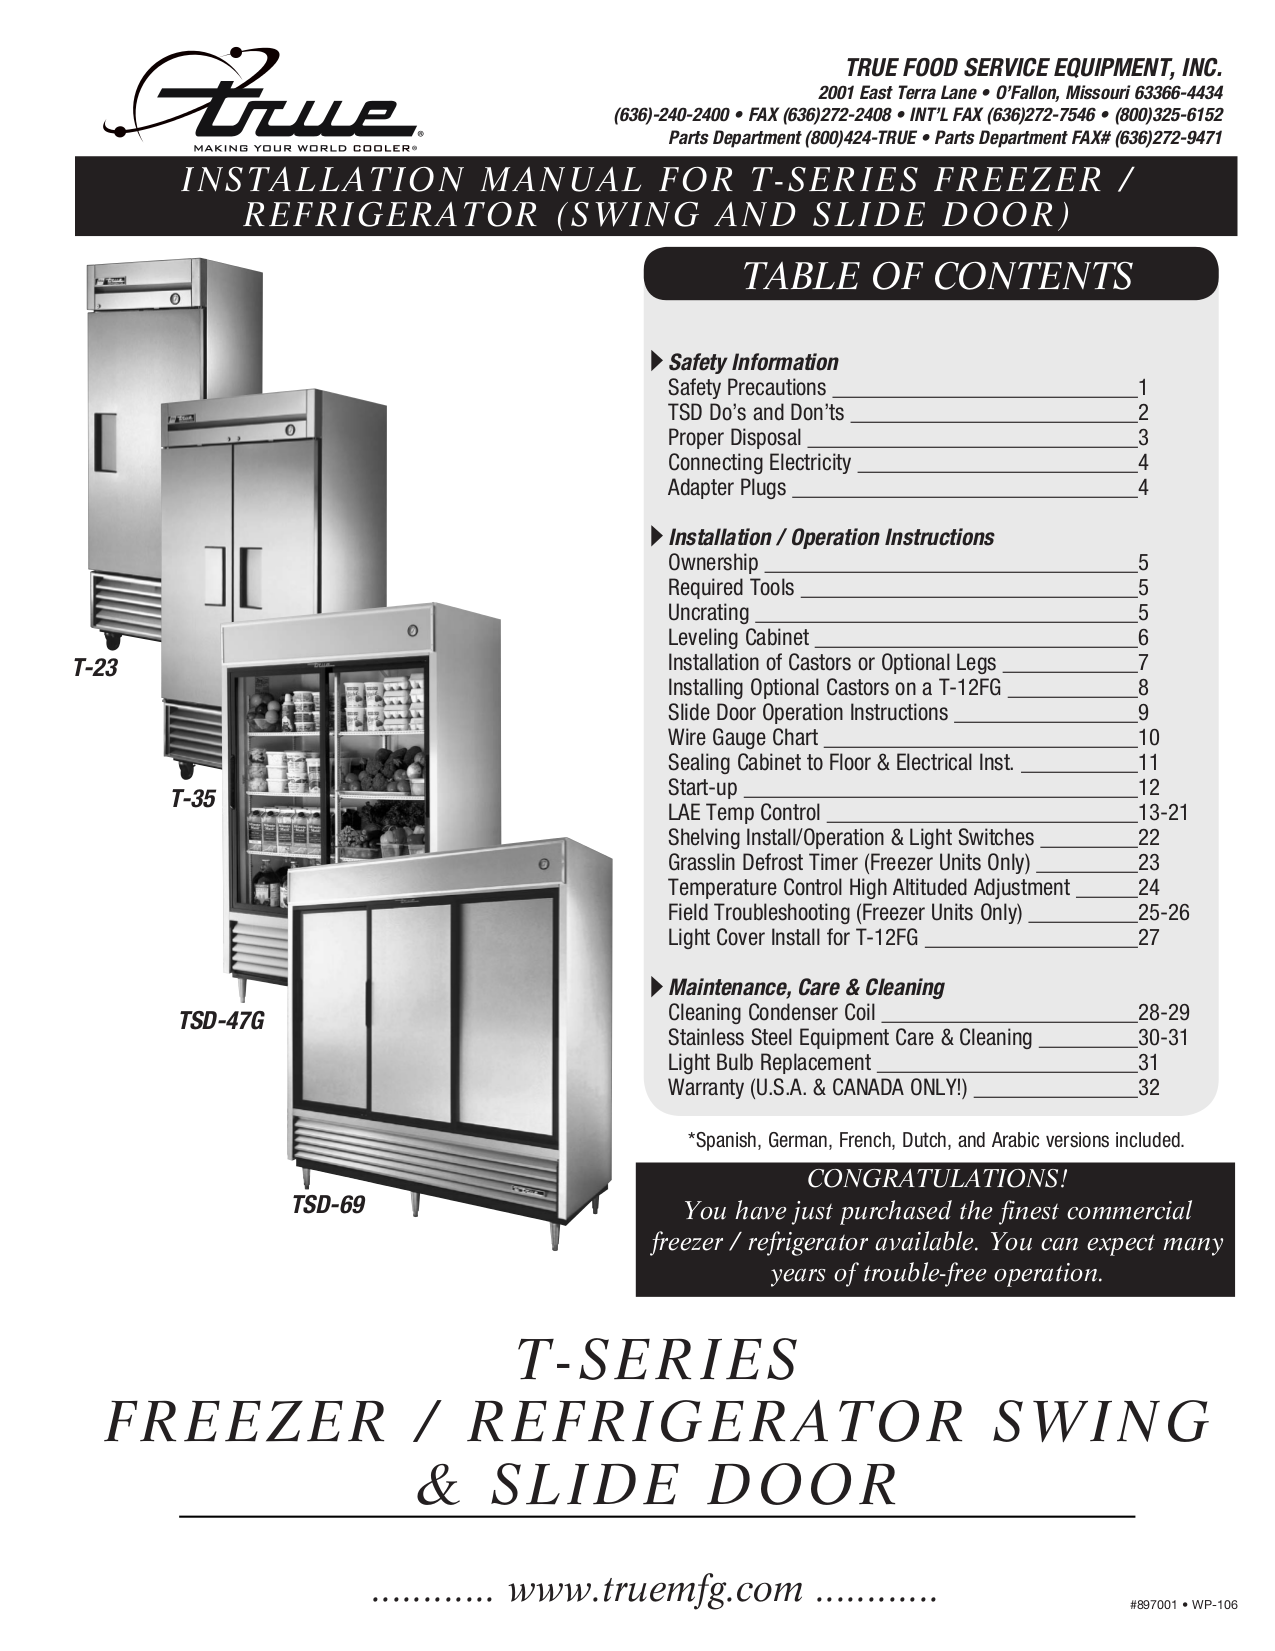 pdf for True Refrigerator T-12 manual